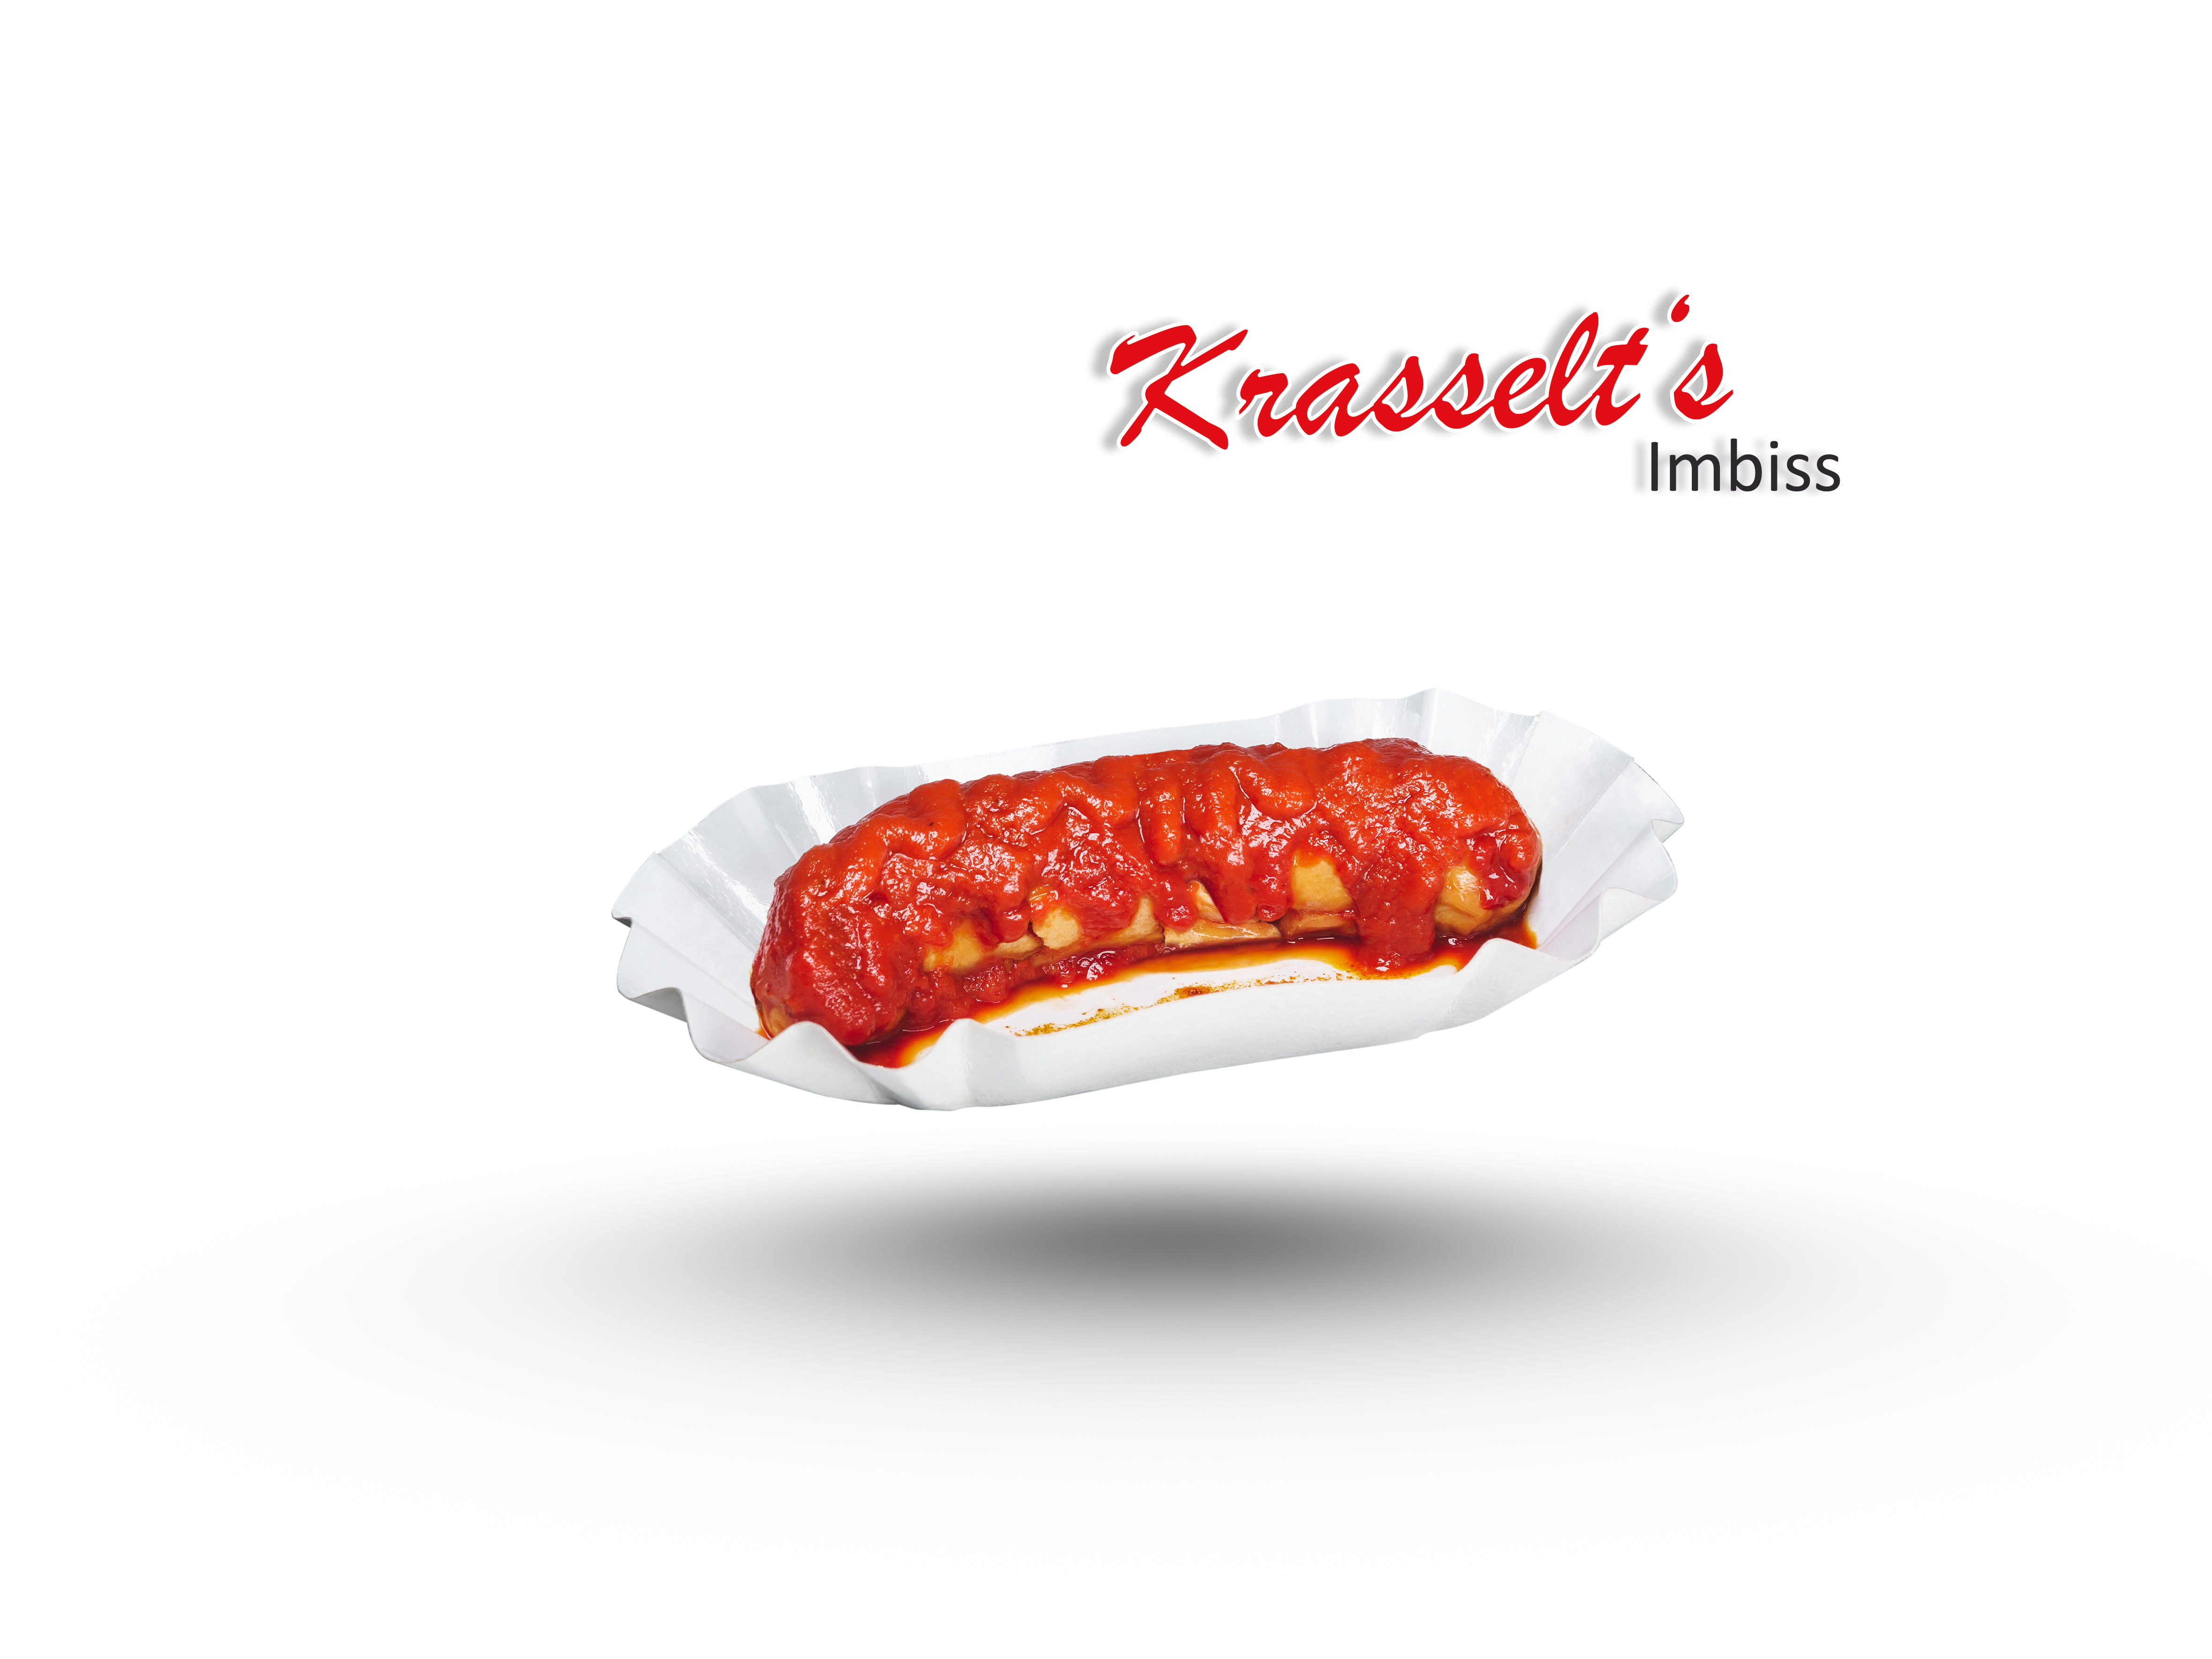 10er Packung -Krasselt's ohne Pelle- Berliner Currywurst